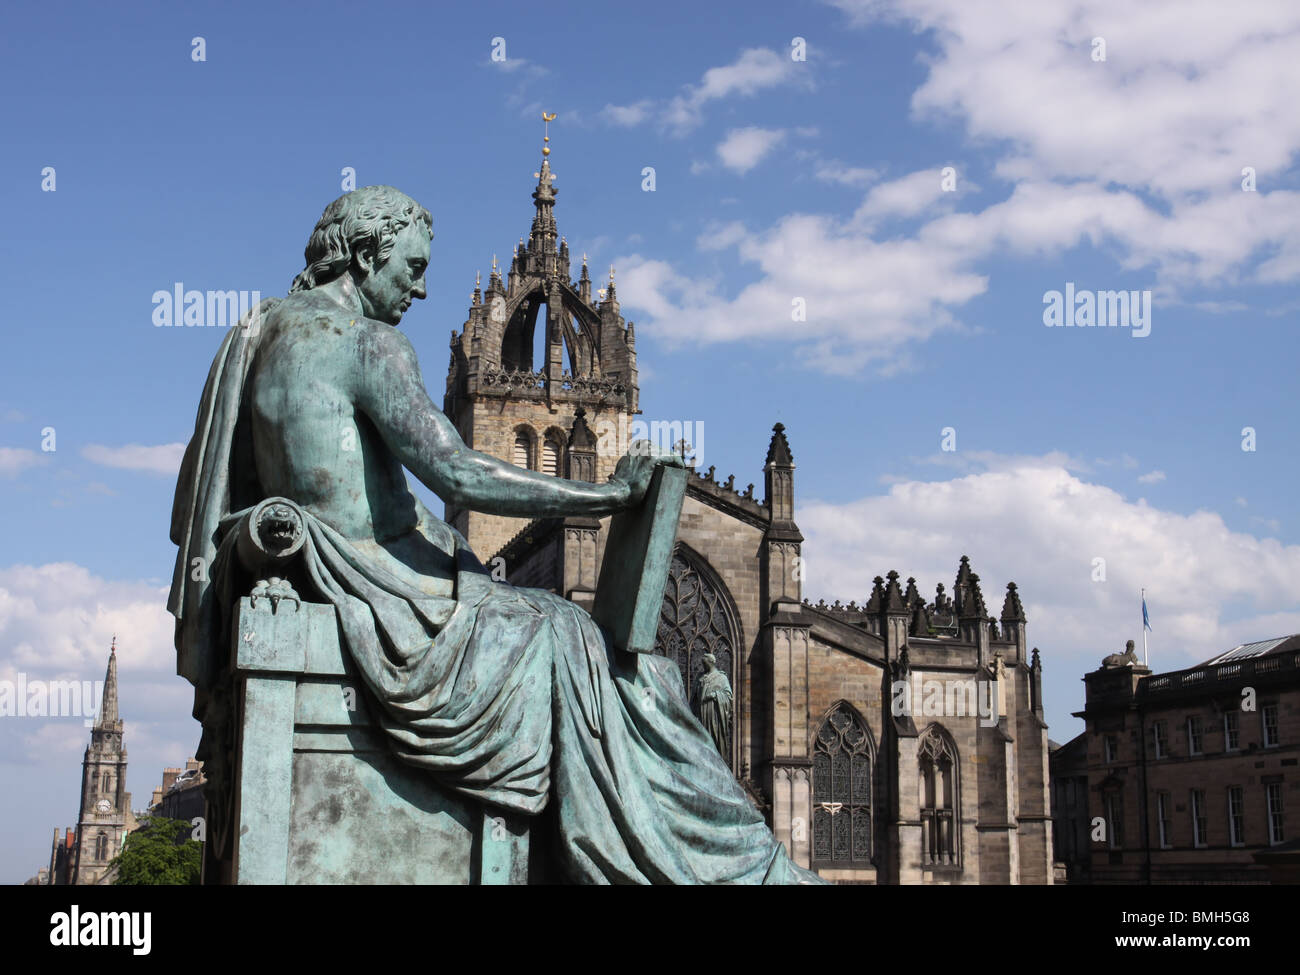 Statue des Philosophen David Hume in Royal Mile mit St Giles Kathedrale Edinburgh Schottland Juni 2010 Stockfoto